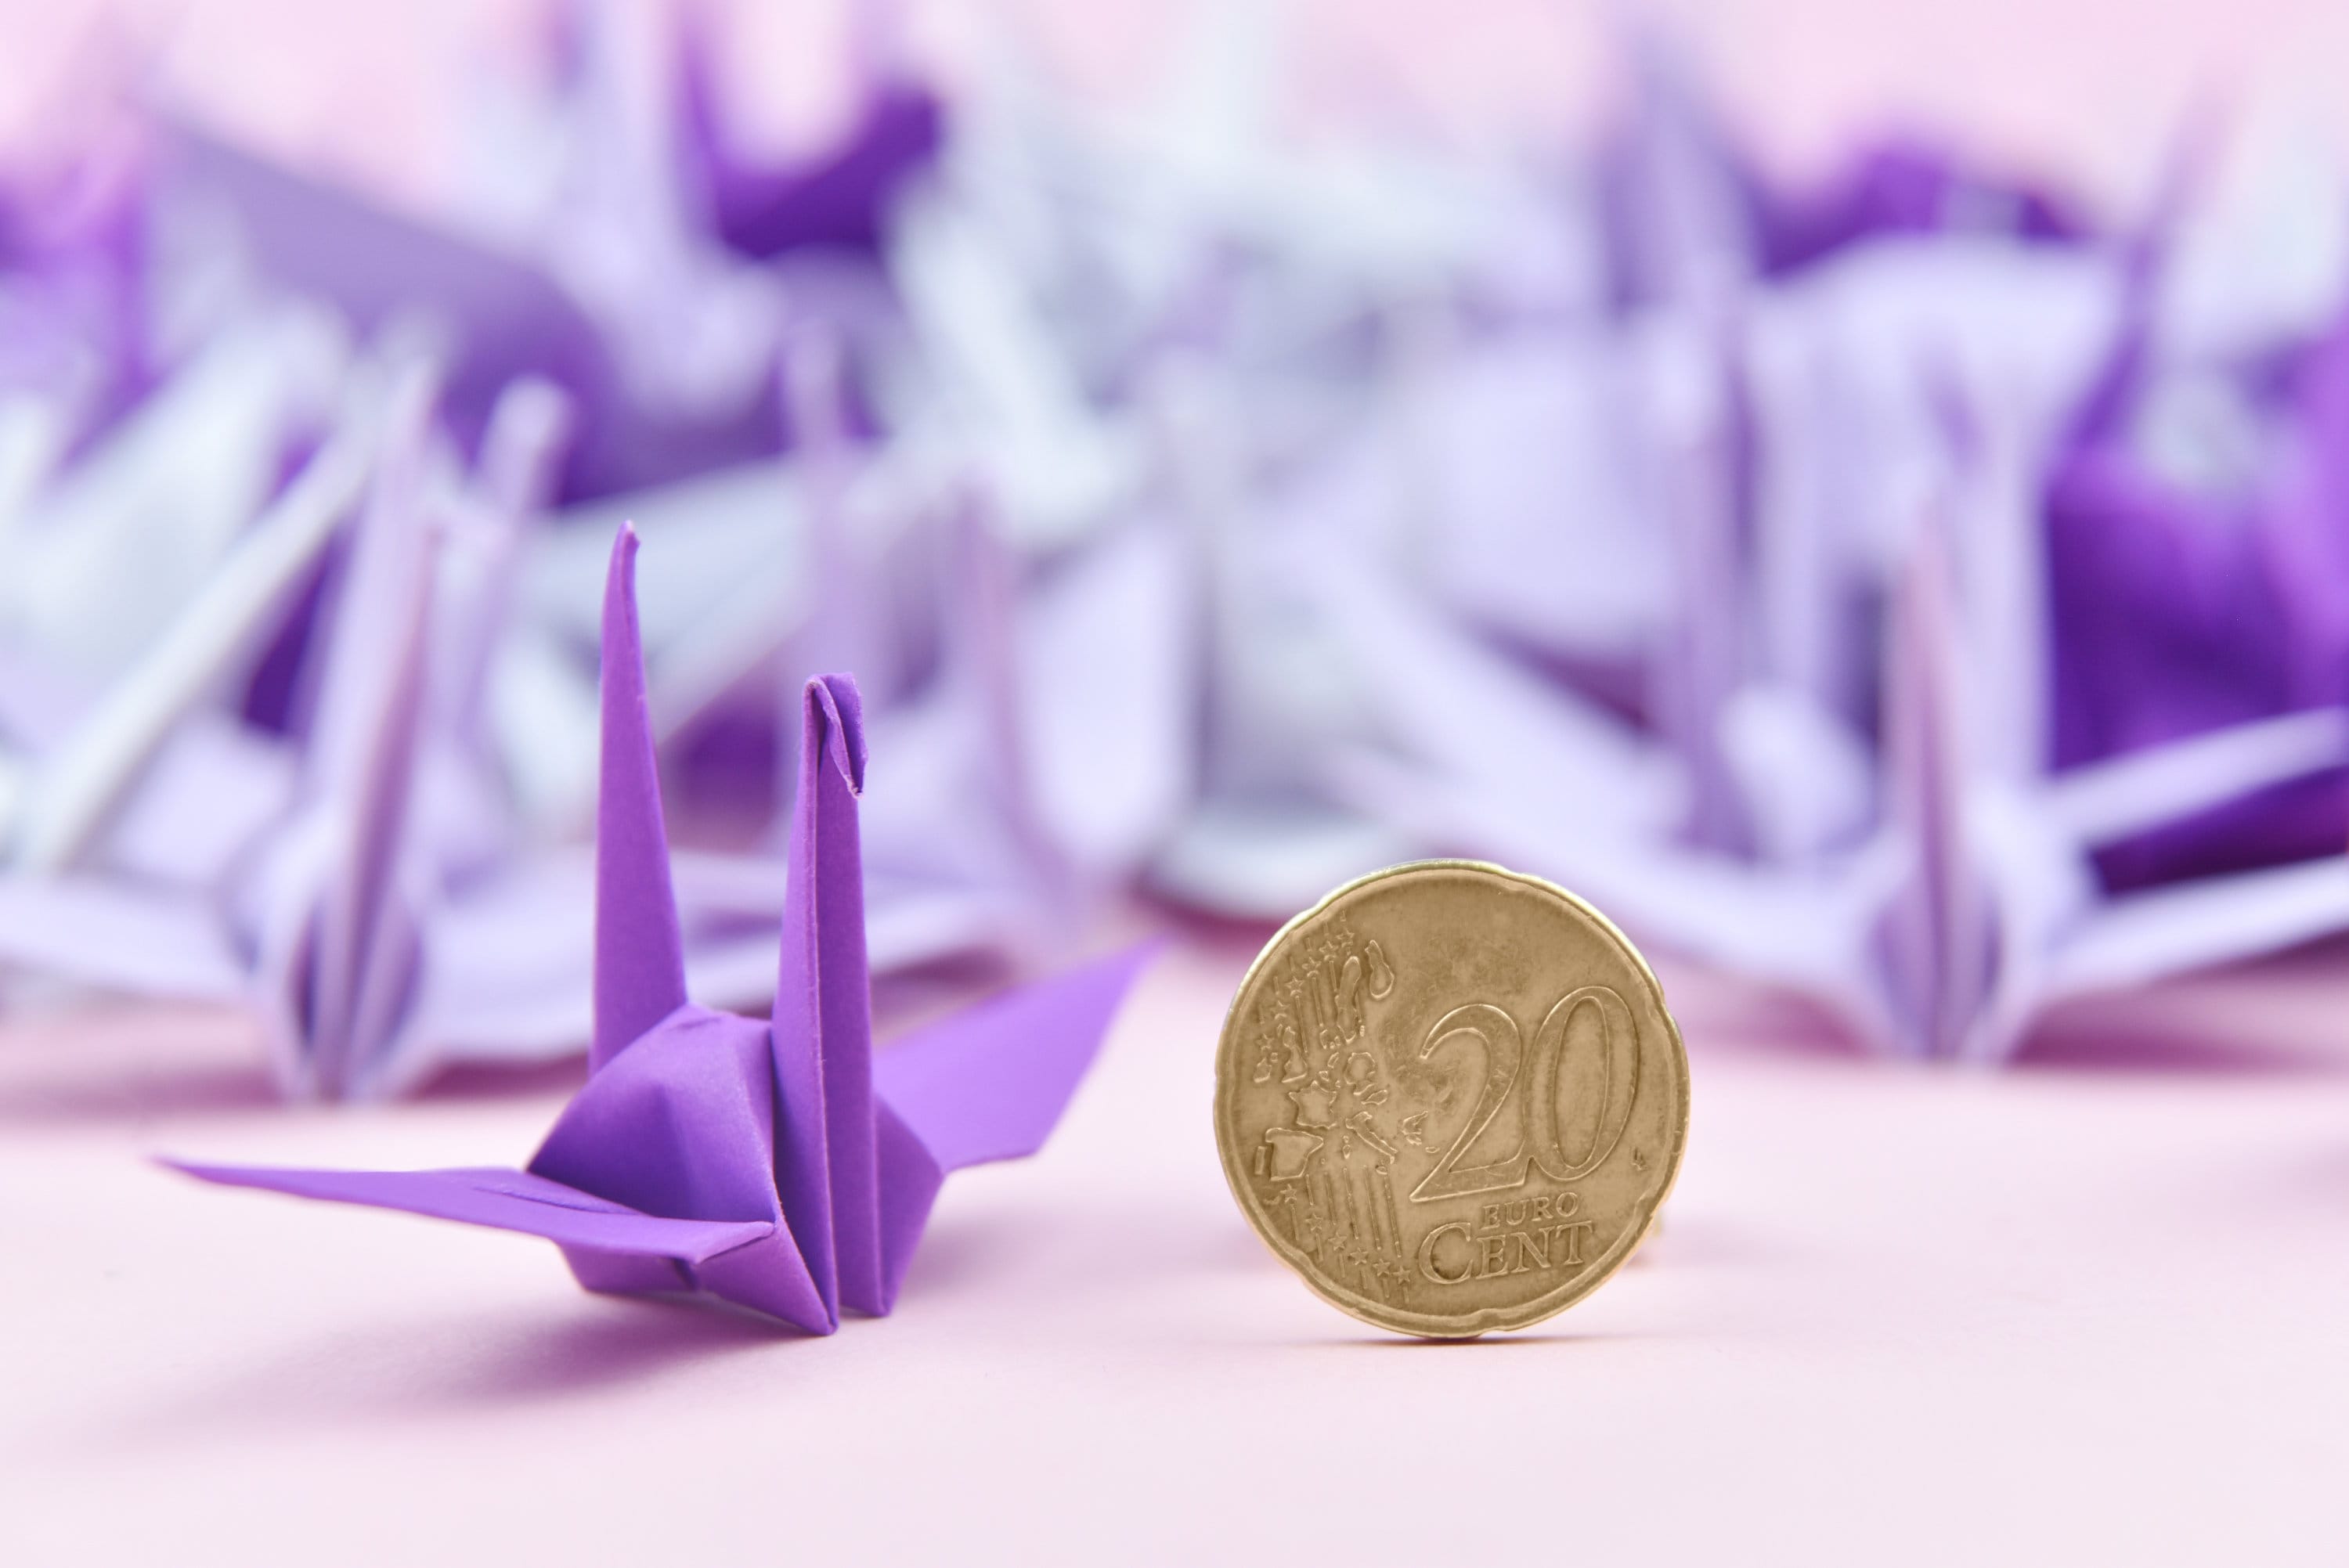 1000 Origami Paper Crane Purple Shade Tone 3x3 inches for Wedding Decor, Anniversary Gift, Valentines, Backdrop